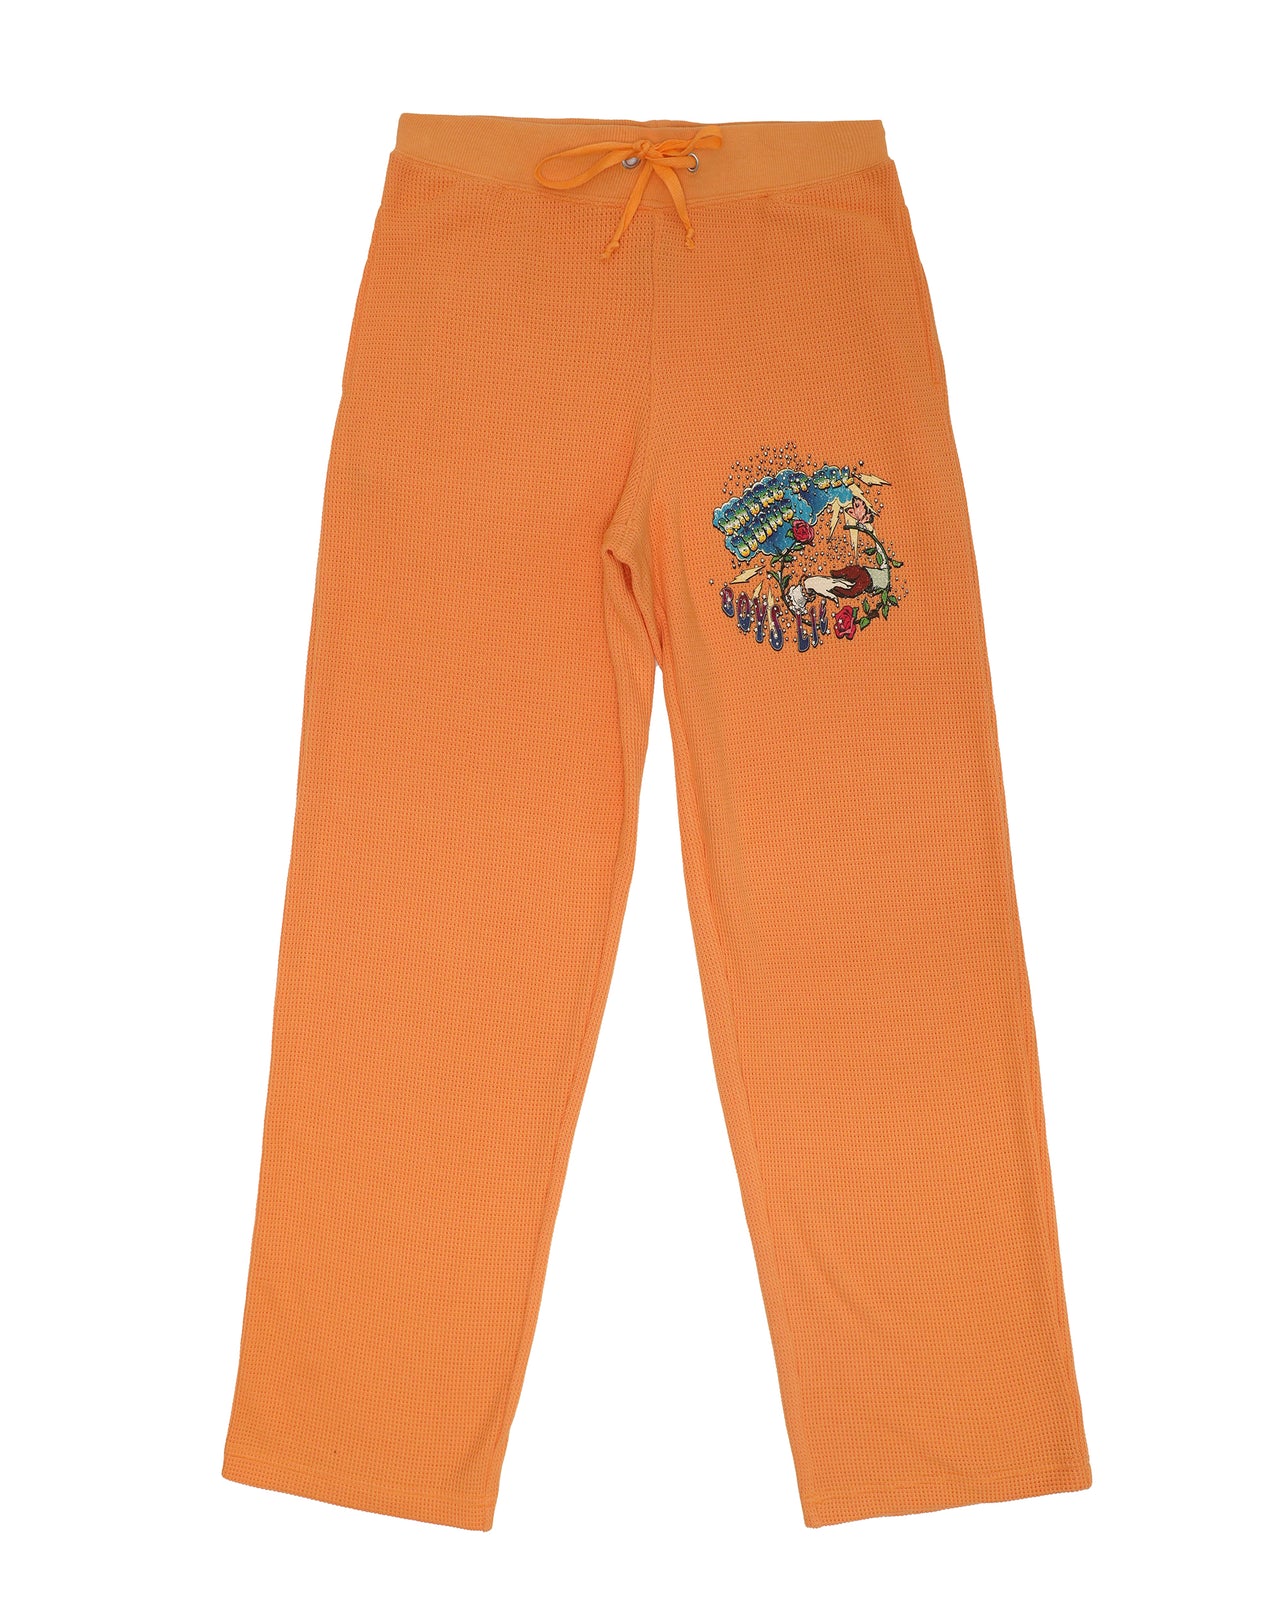 Where it Begins Thermal Pants Orange, Sweatpant Bottom by Boys Lie | LIT Boutique